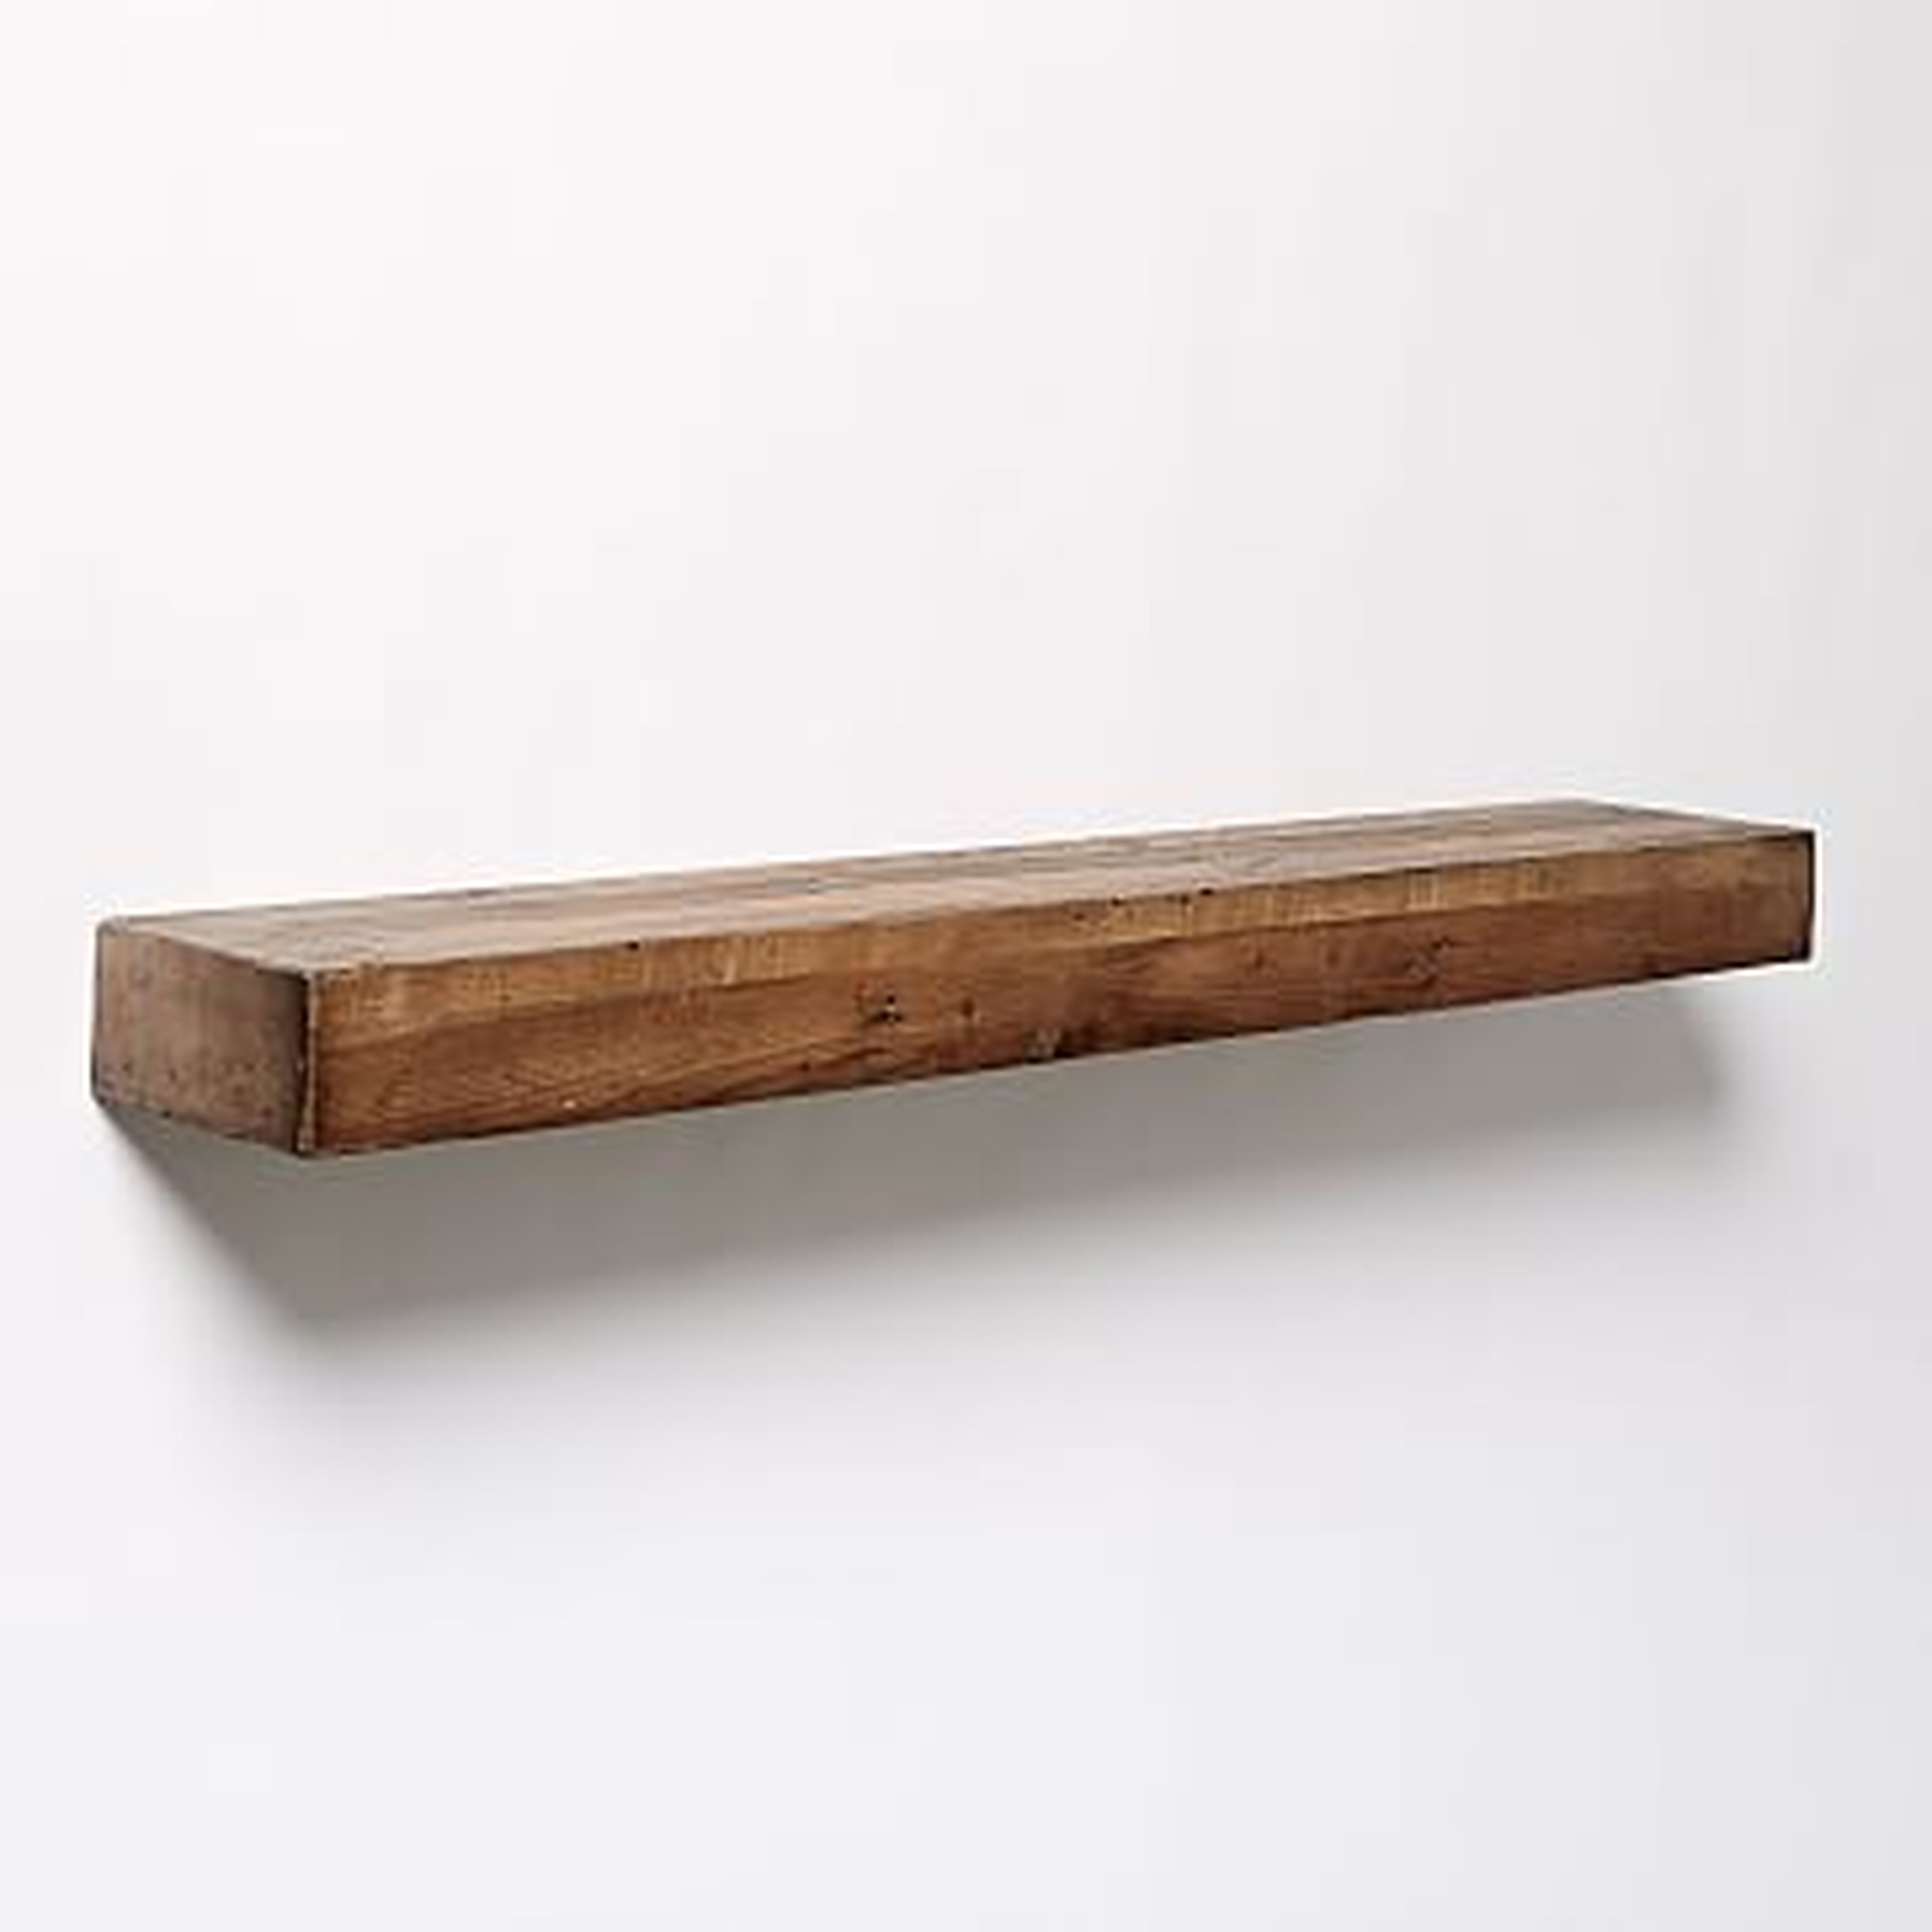 Reclaimed Wood Floating Shelf: 3' - West Elm